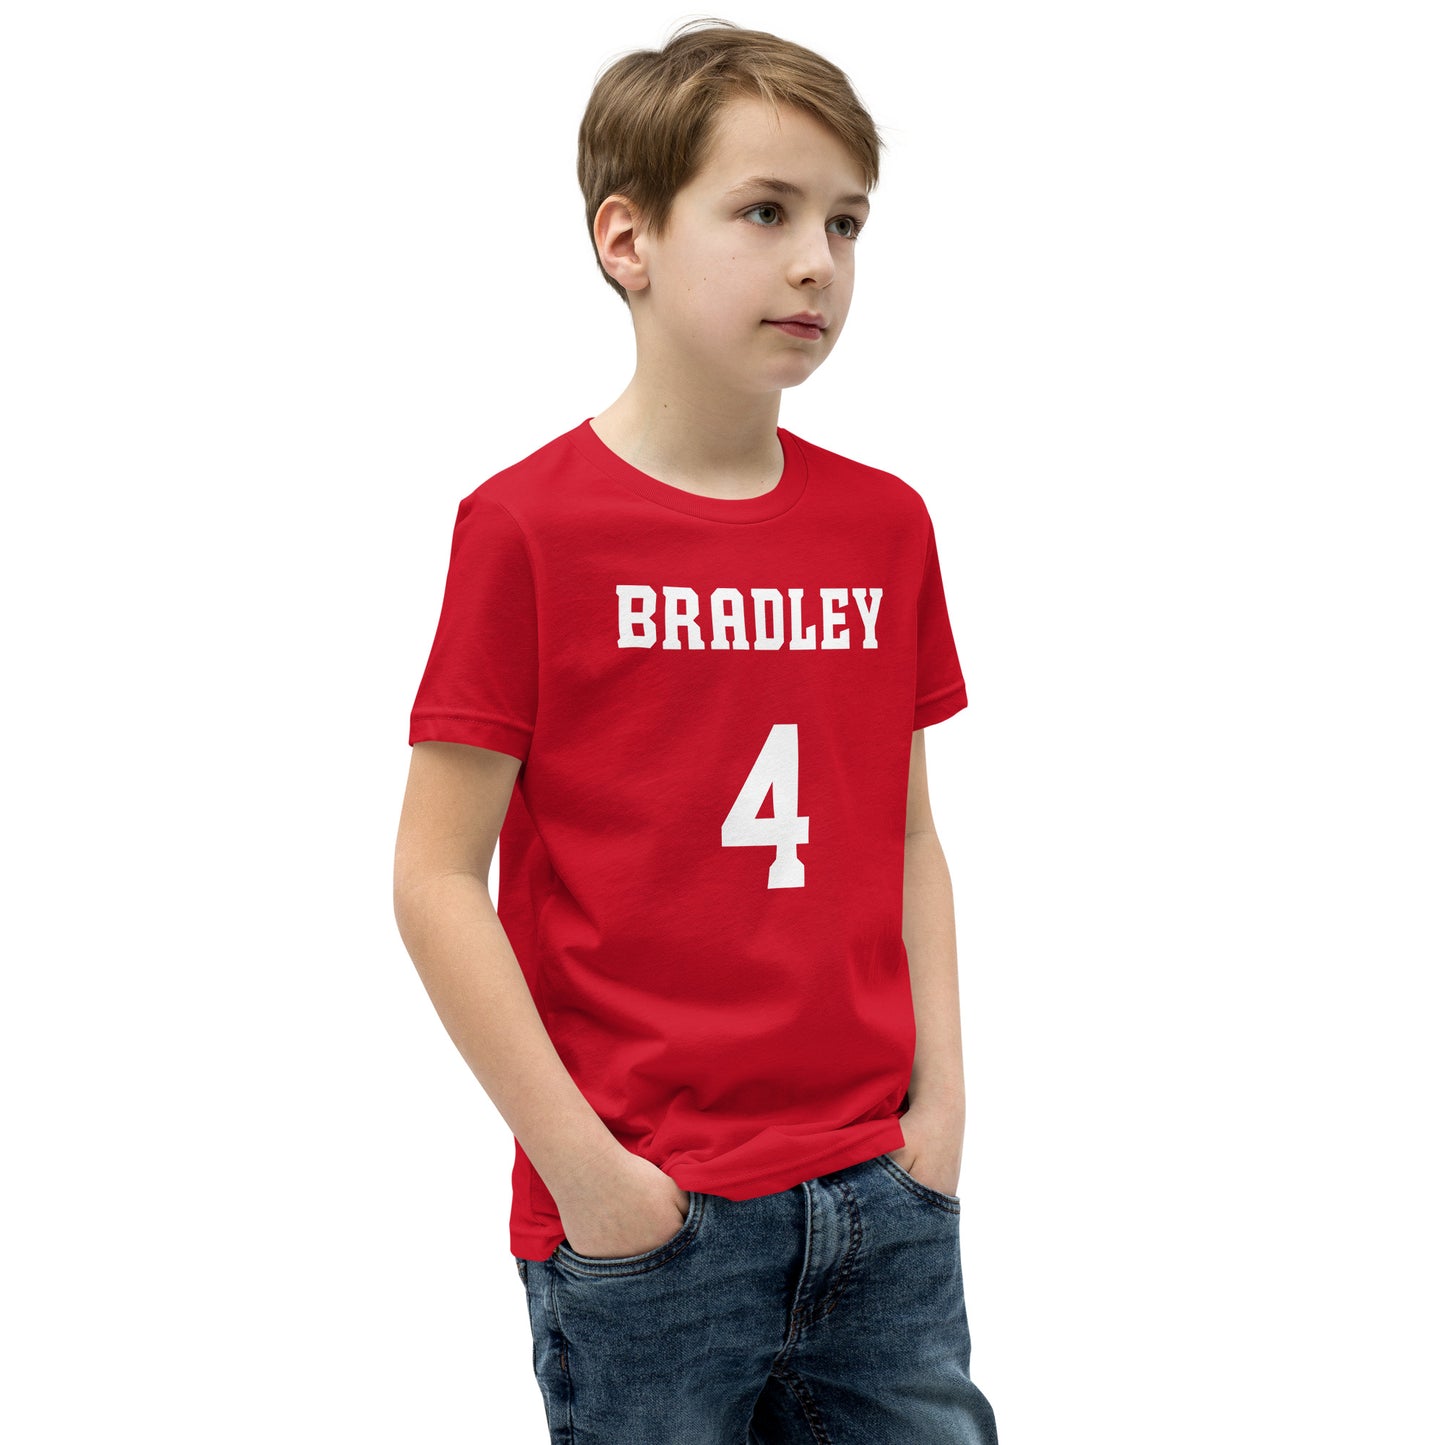 Ahmet Jonovic Kids Jersey T-Shirt